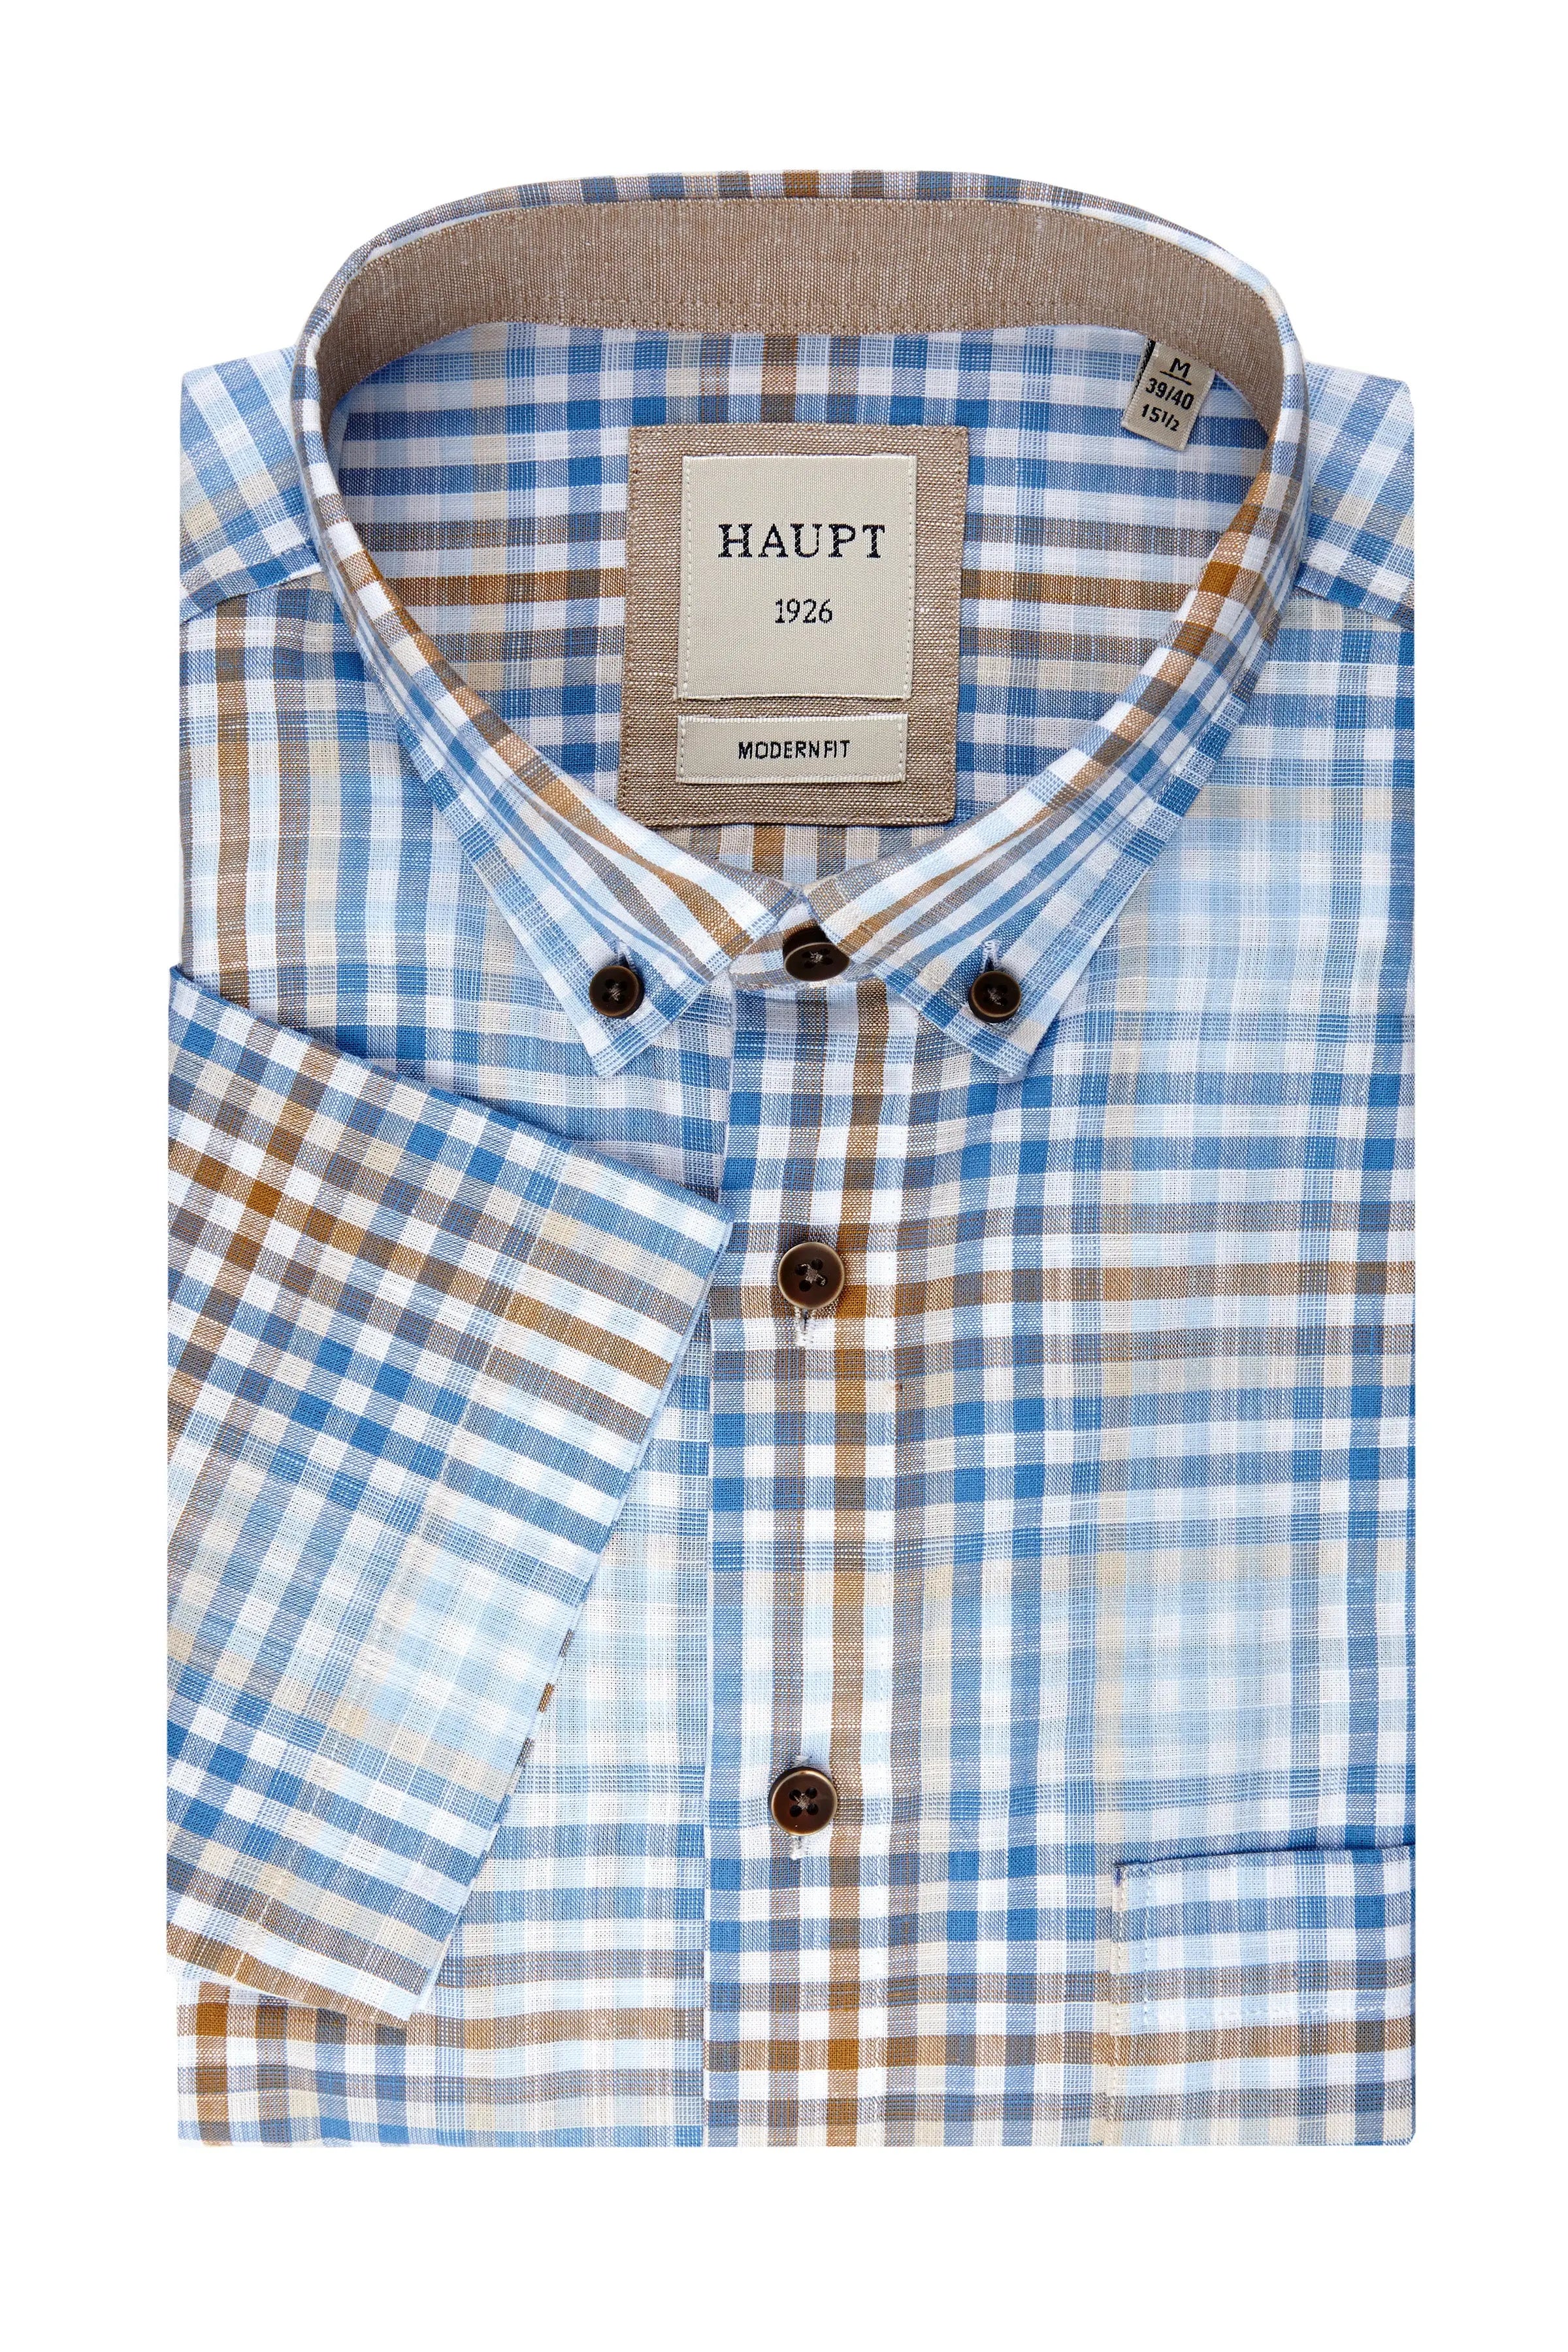 Baumwoll-Herrenhemd light blue check Haupt